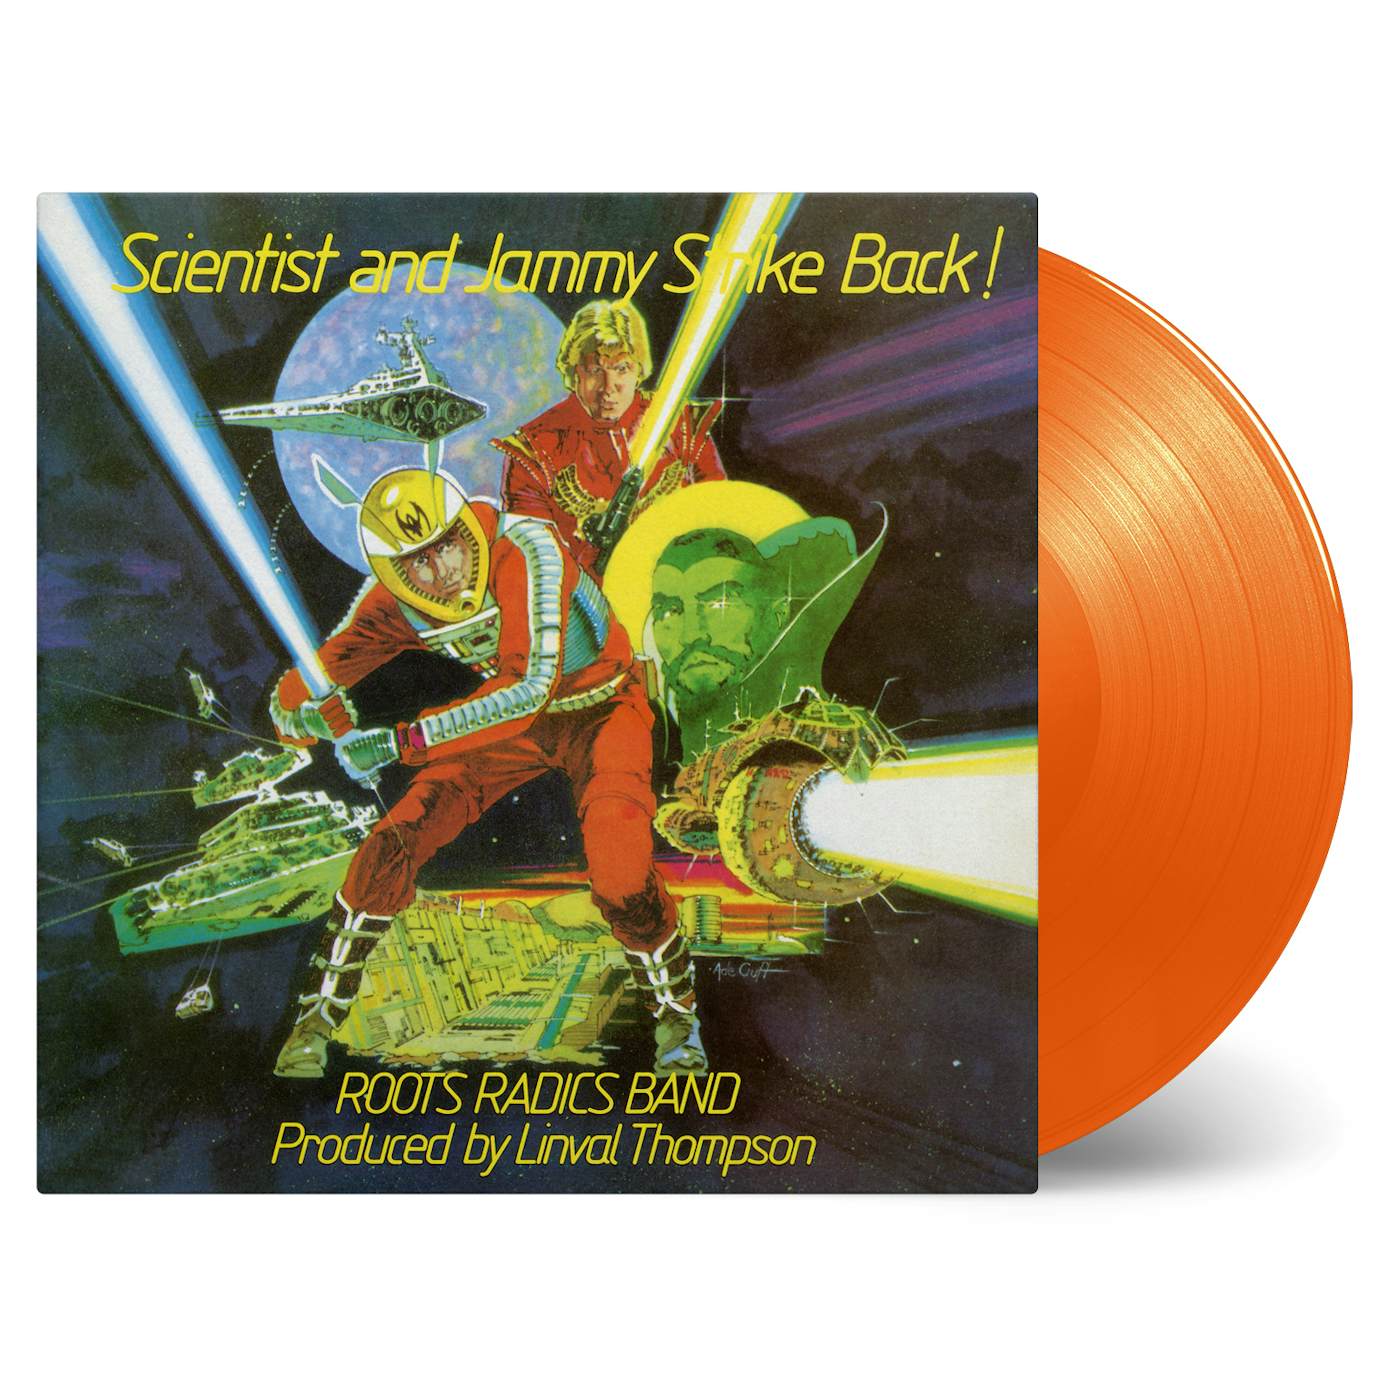 SCIENTIST & PRINCE JAMMY STRIKE BACK! - Limited Edition 180 Gram Orange Colored Vinyl Record